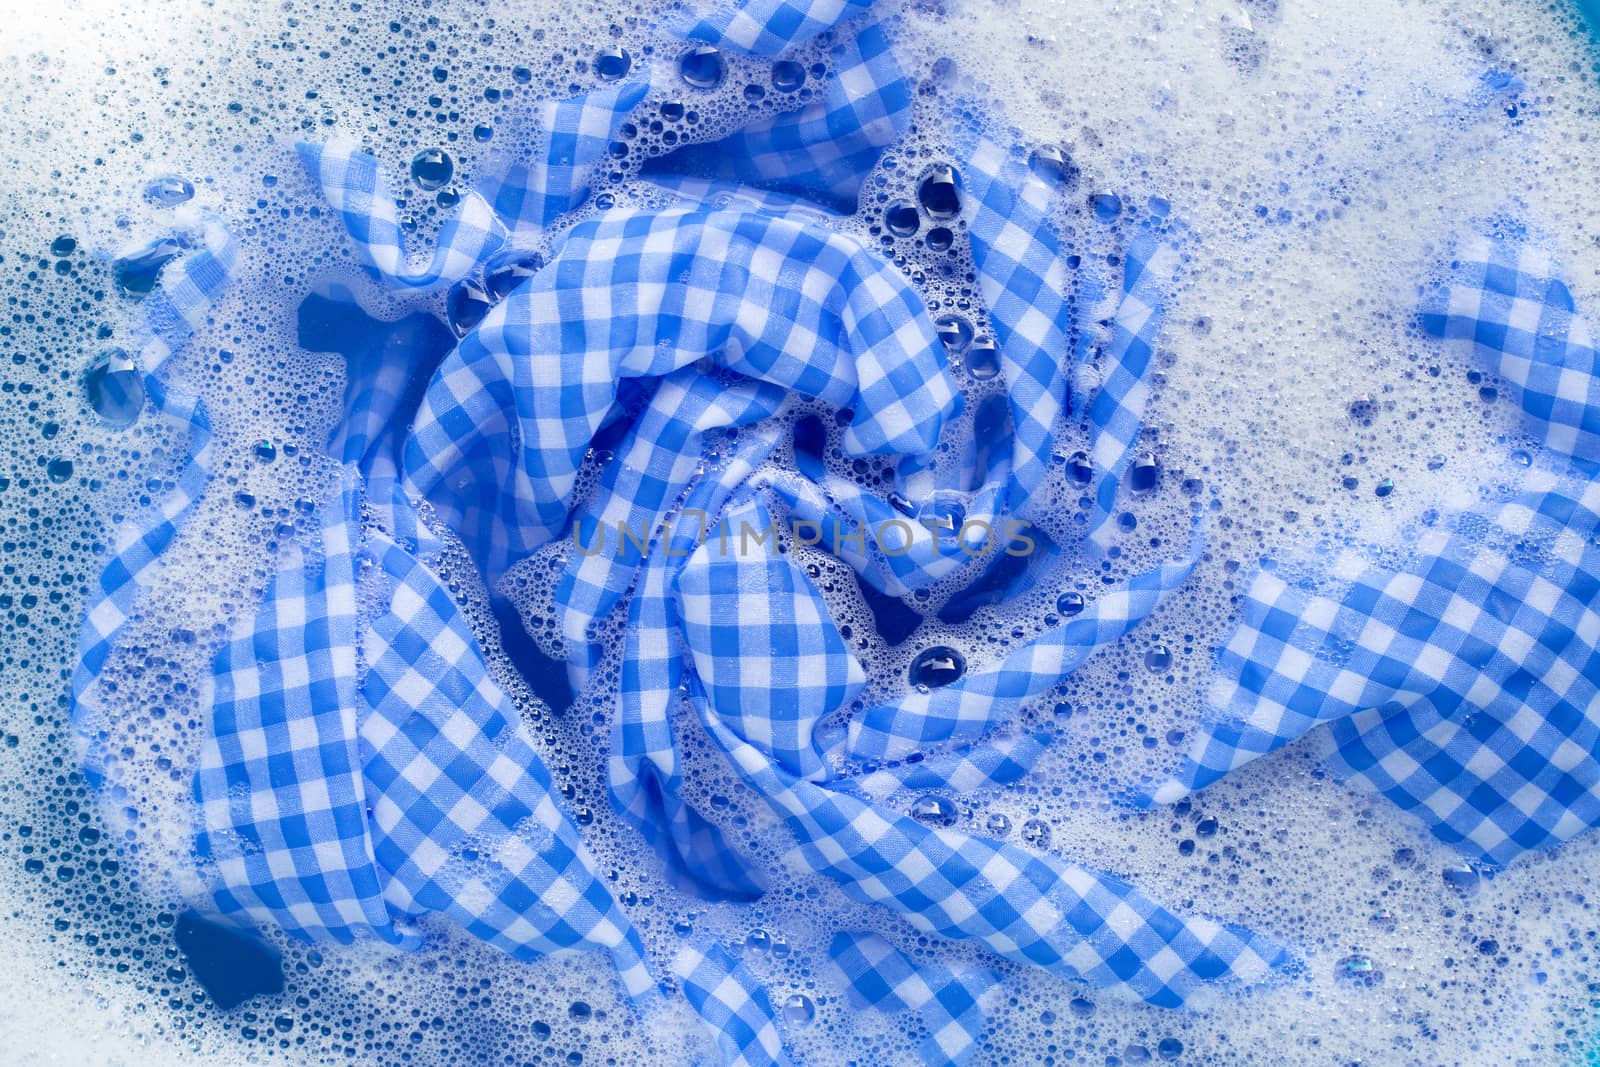 Blue white tablecloth  soak in powder detergent water dissolutio by Bowonpat